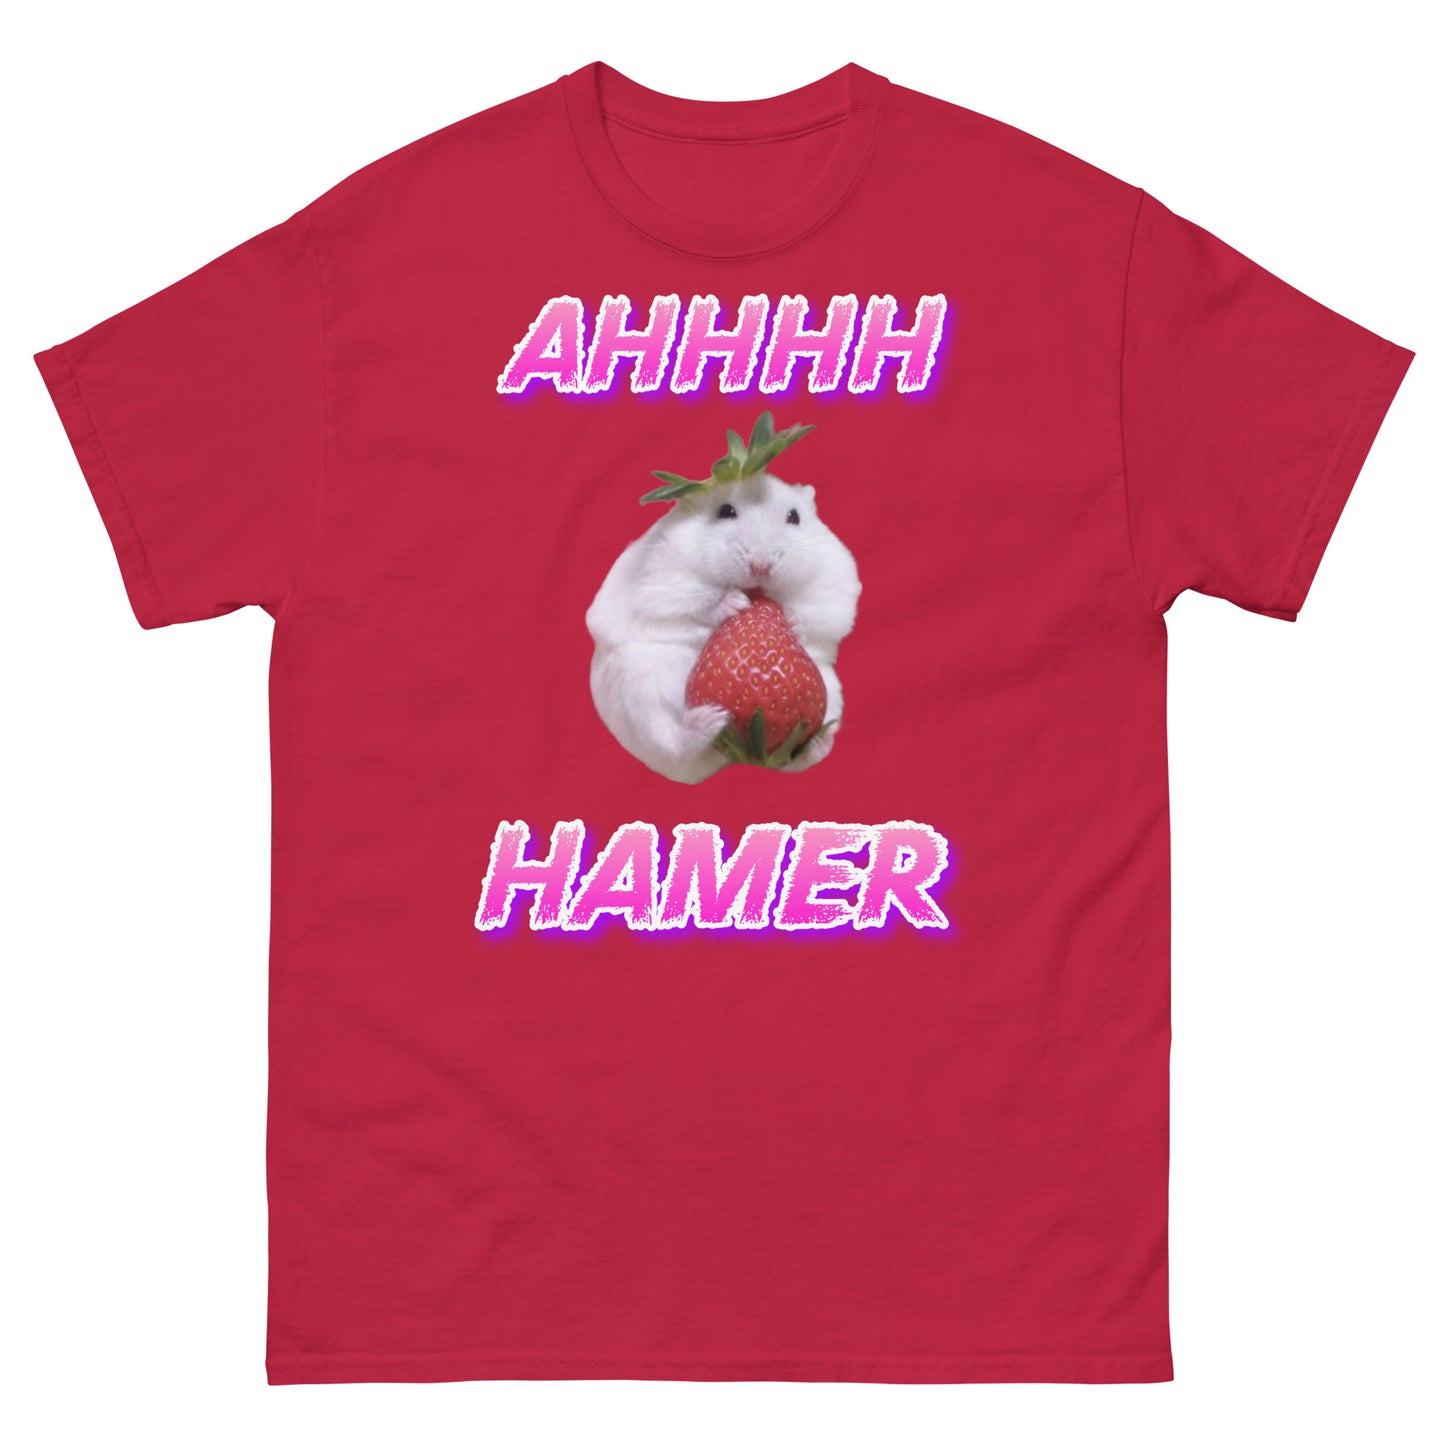 Hamster / Hamer Cringey Tee (clean version)